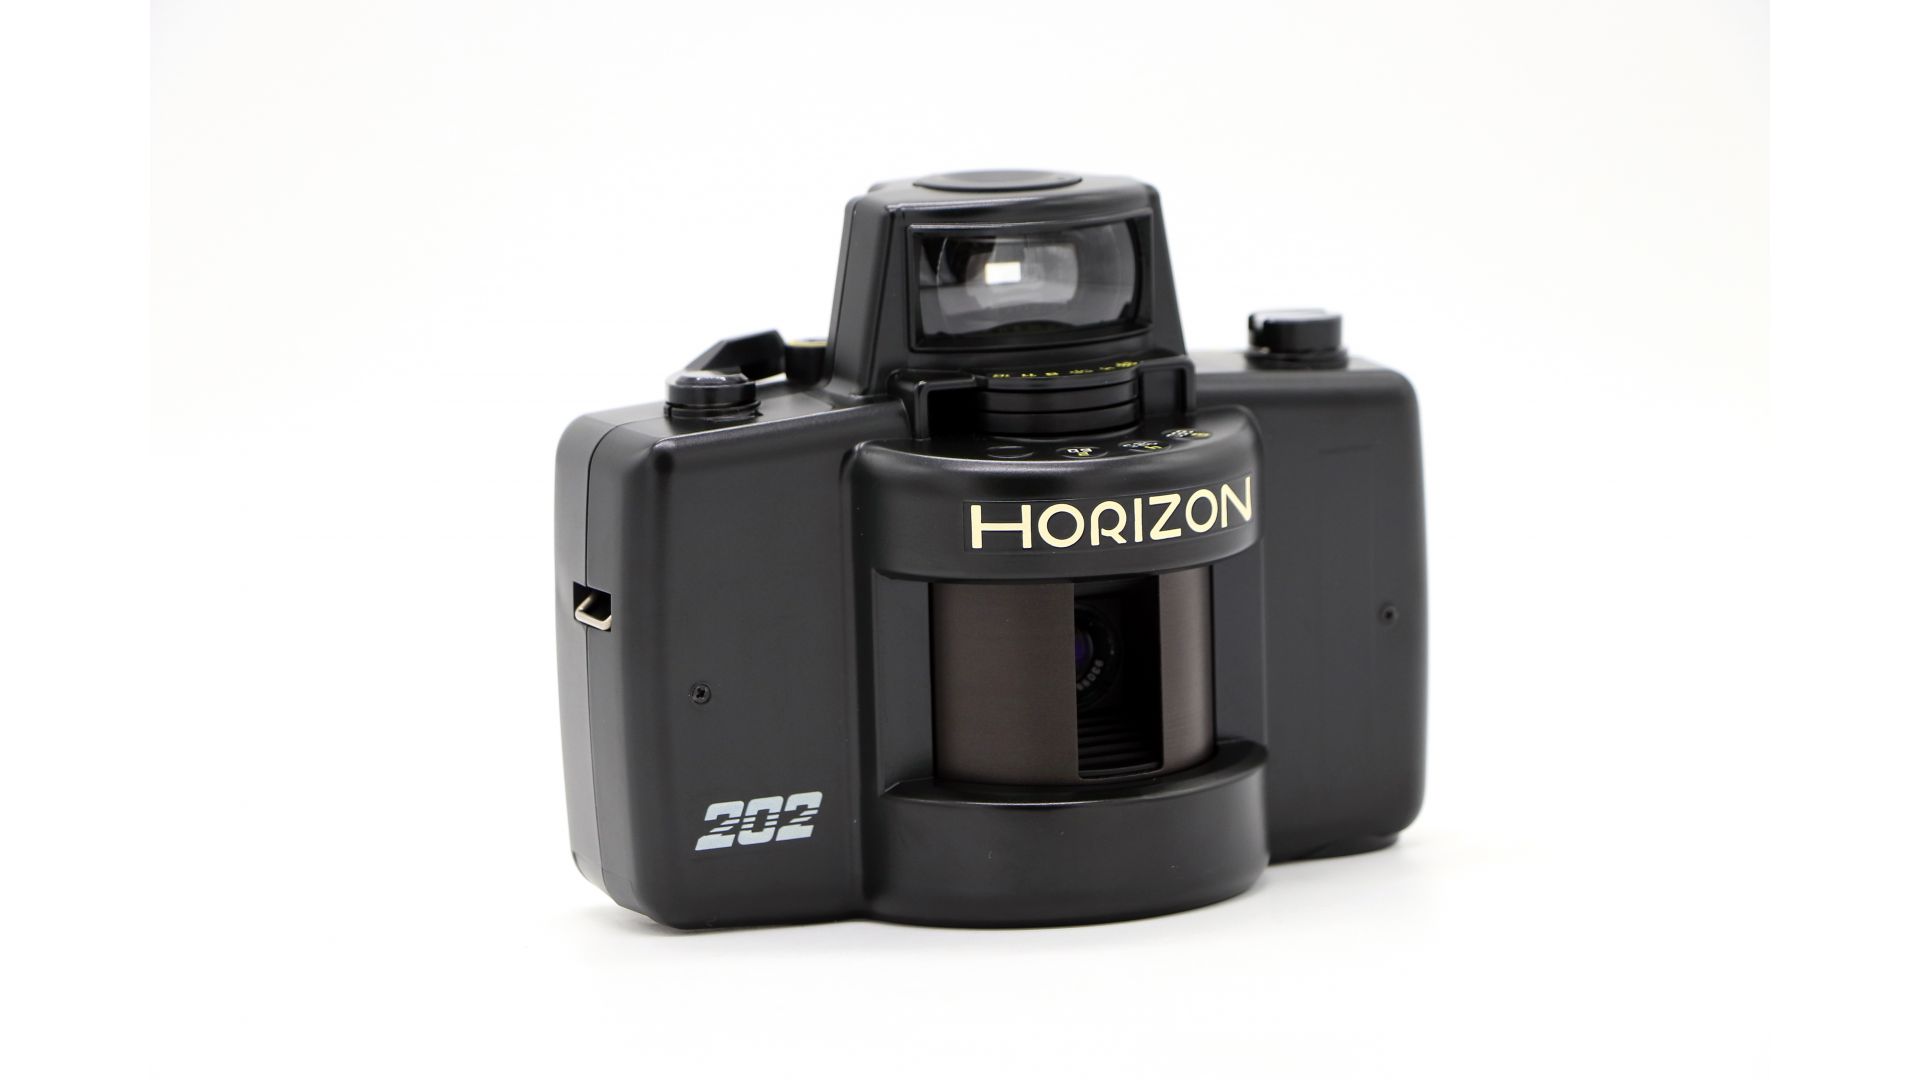 Horizon камера. Фотоаппарат Горизонт 205. Горизонт-202. Horizon 202. Панорамный фотоаппарат Горизонт экспортный.